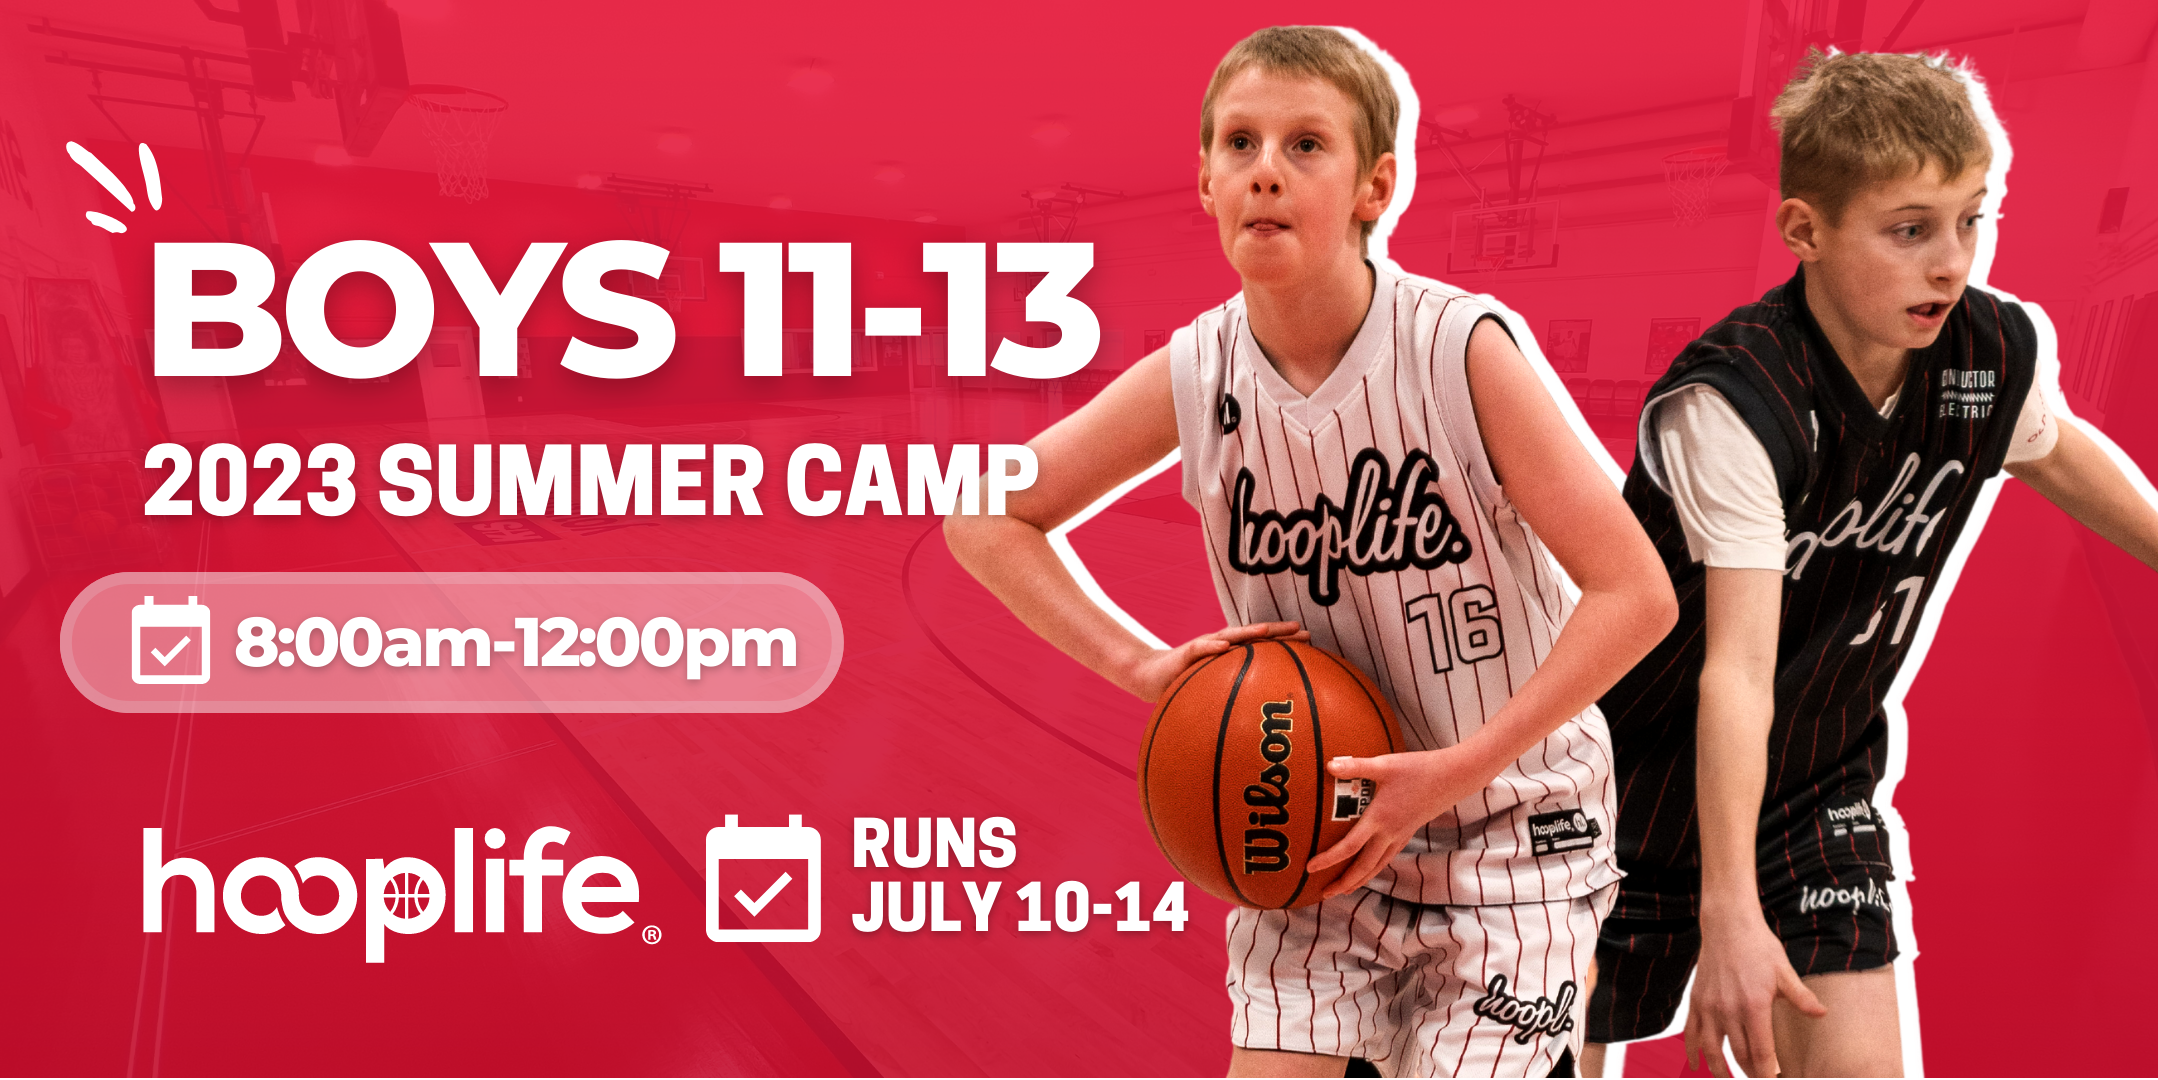 Boys 11-13 Summer Camp | July 10-14